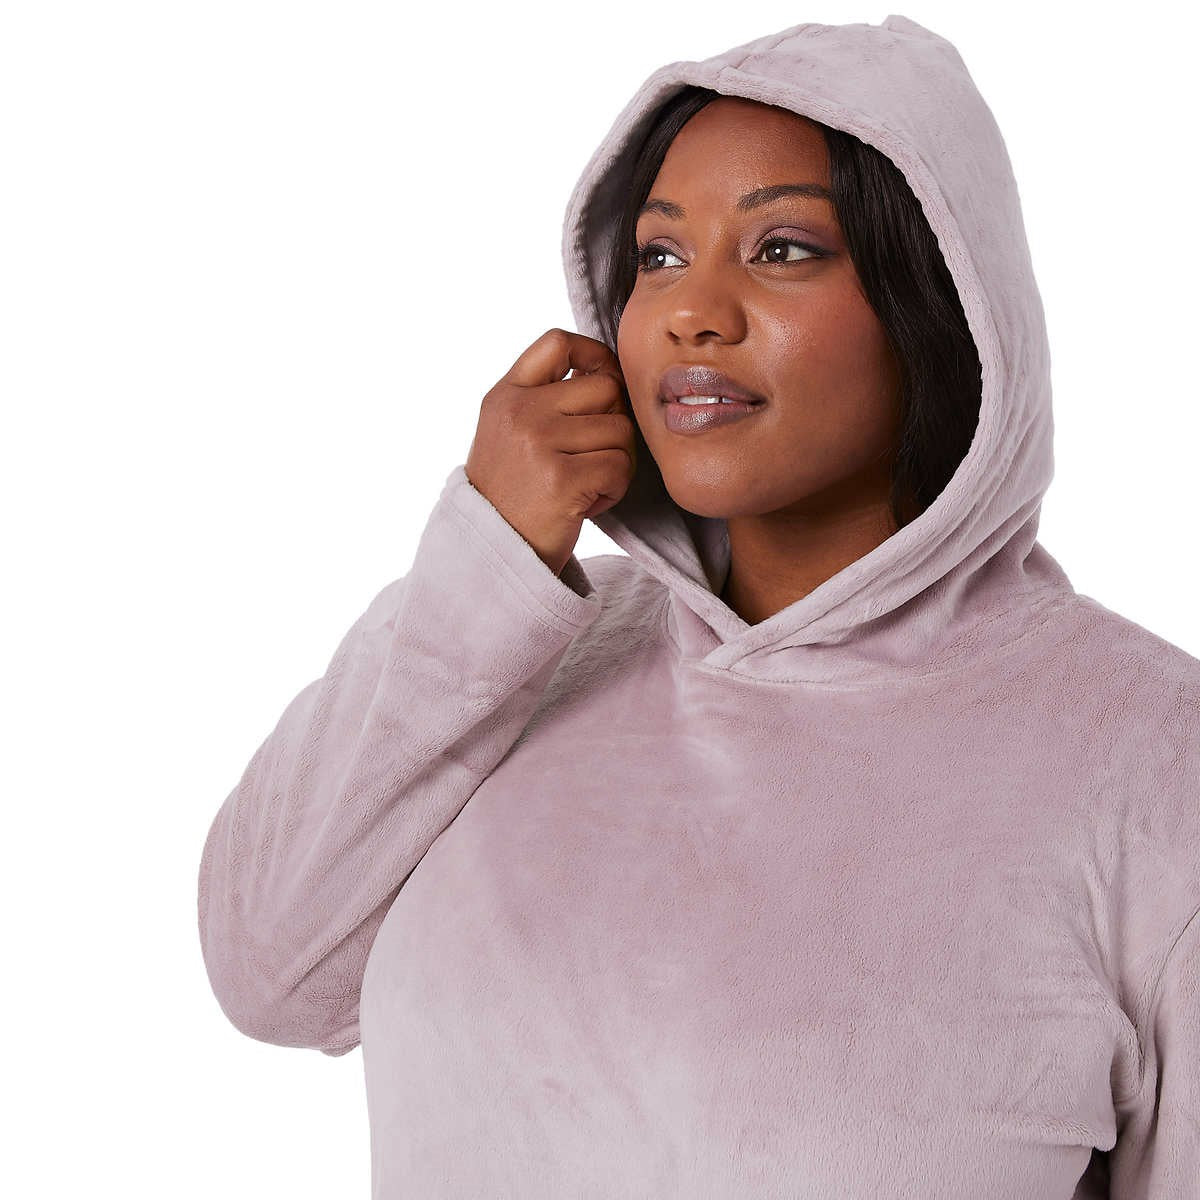 32 Degrees Women's Cozy Soft Velour Front Pocket Hooded Lounger